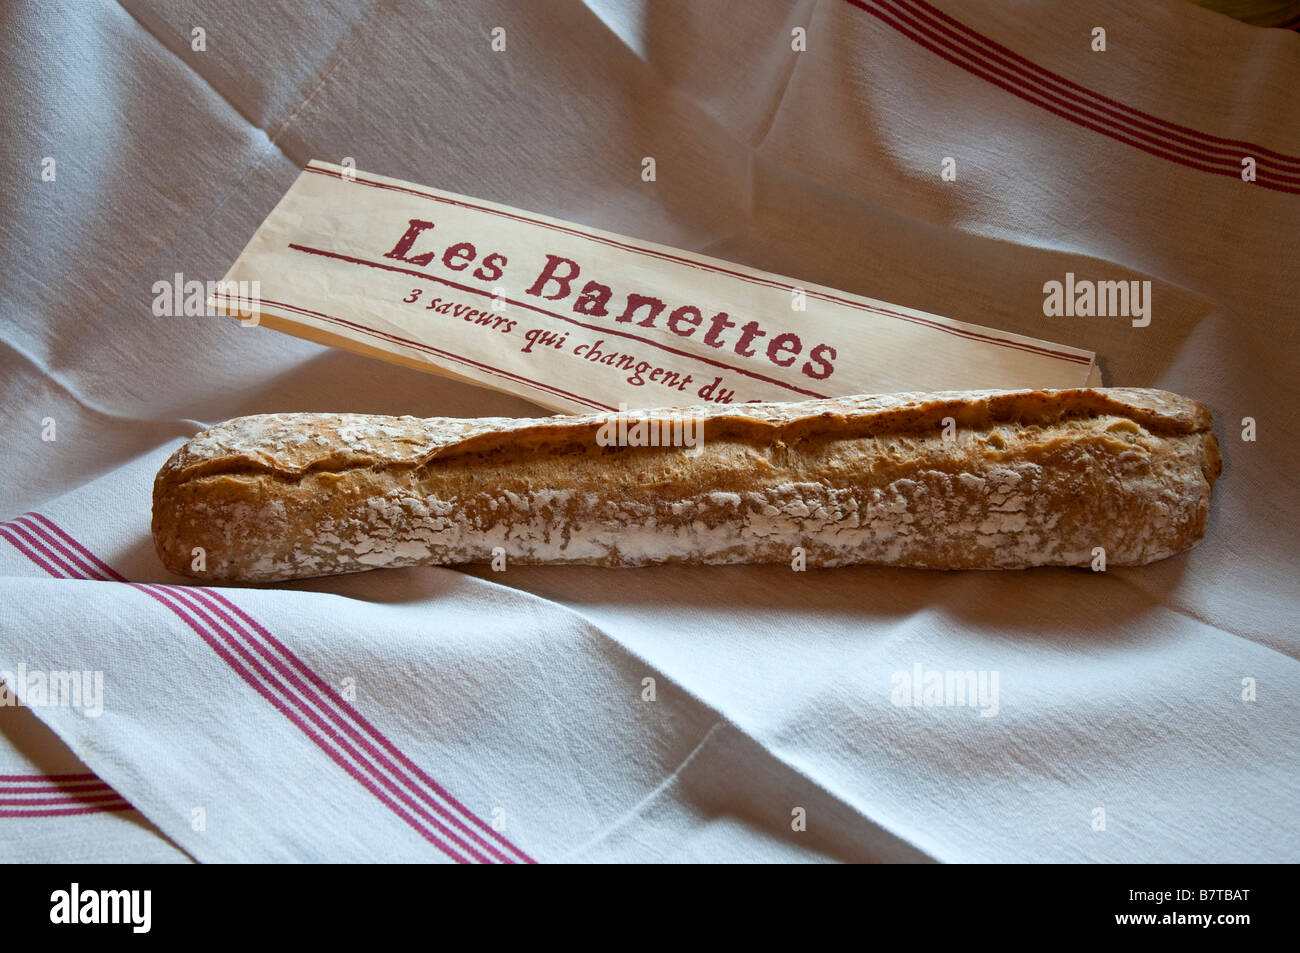 https://c8.alamy.com/comp/B7TBAT/french-banette-baguette-with-paper-bag-france-B7TBAT.jpg